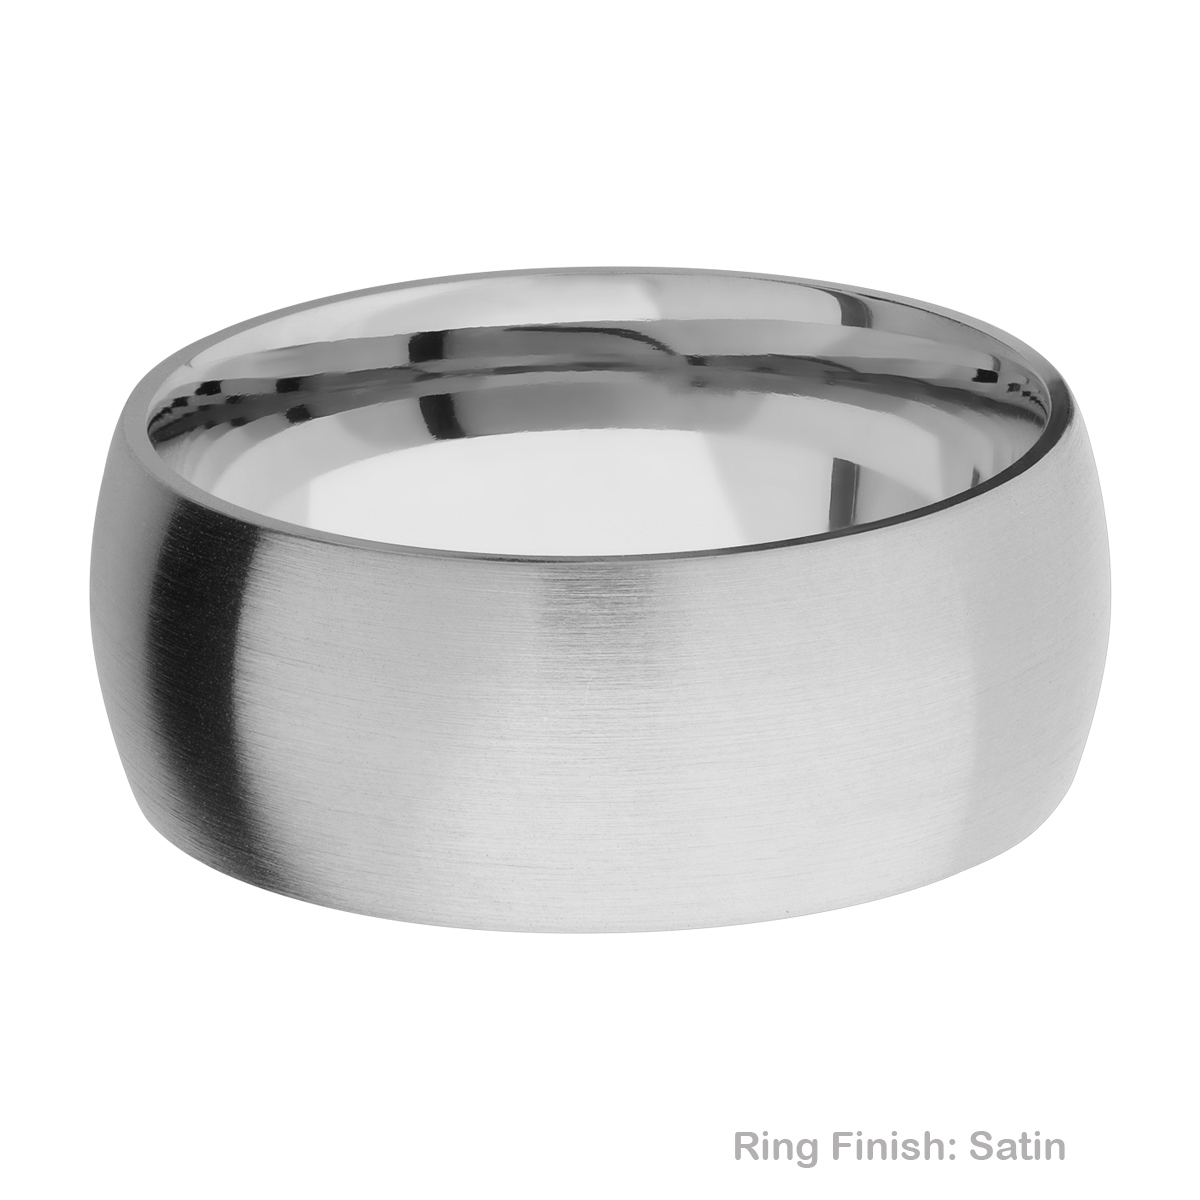 Lashbrook 9D Titanium Wedding Ring or Band